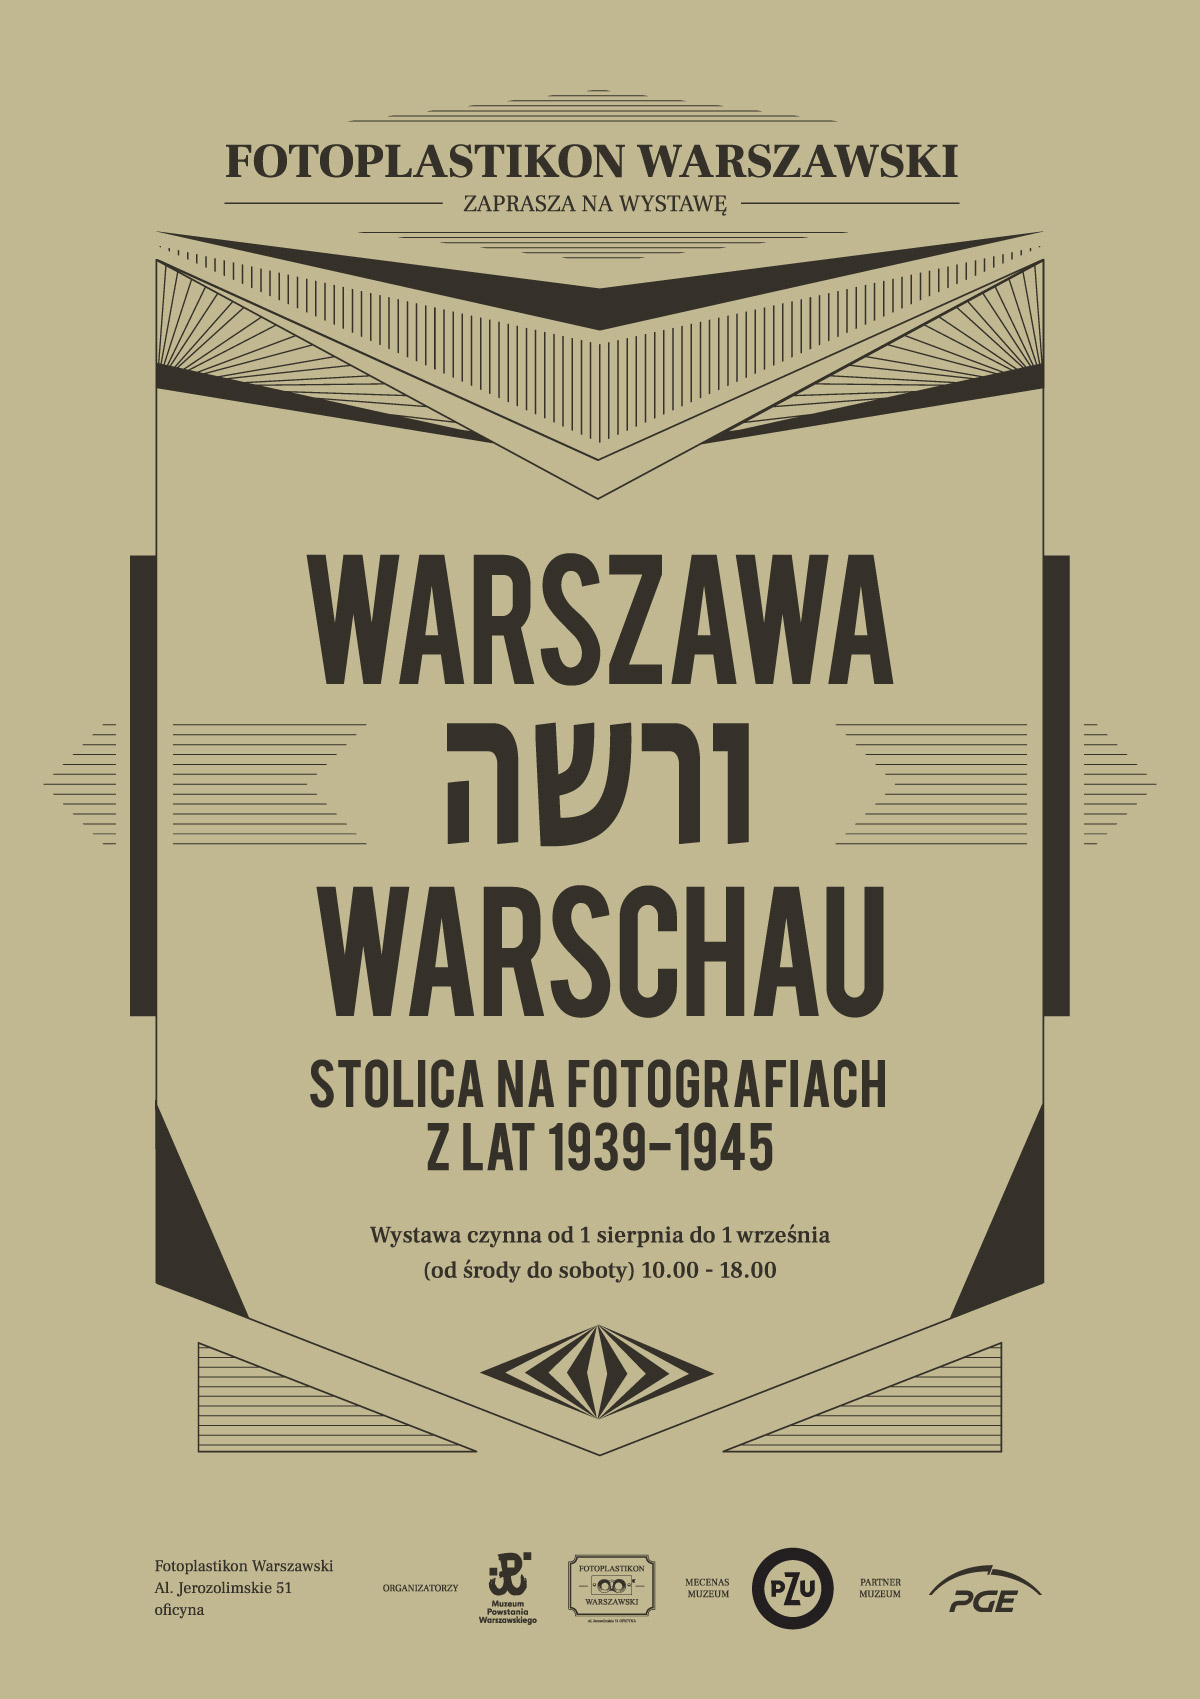 Fotoplastikon-Warszawa-Warschau-2018-08 (2)